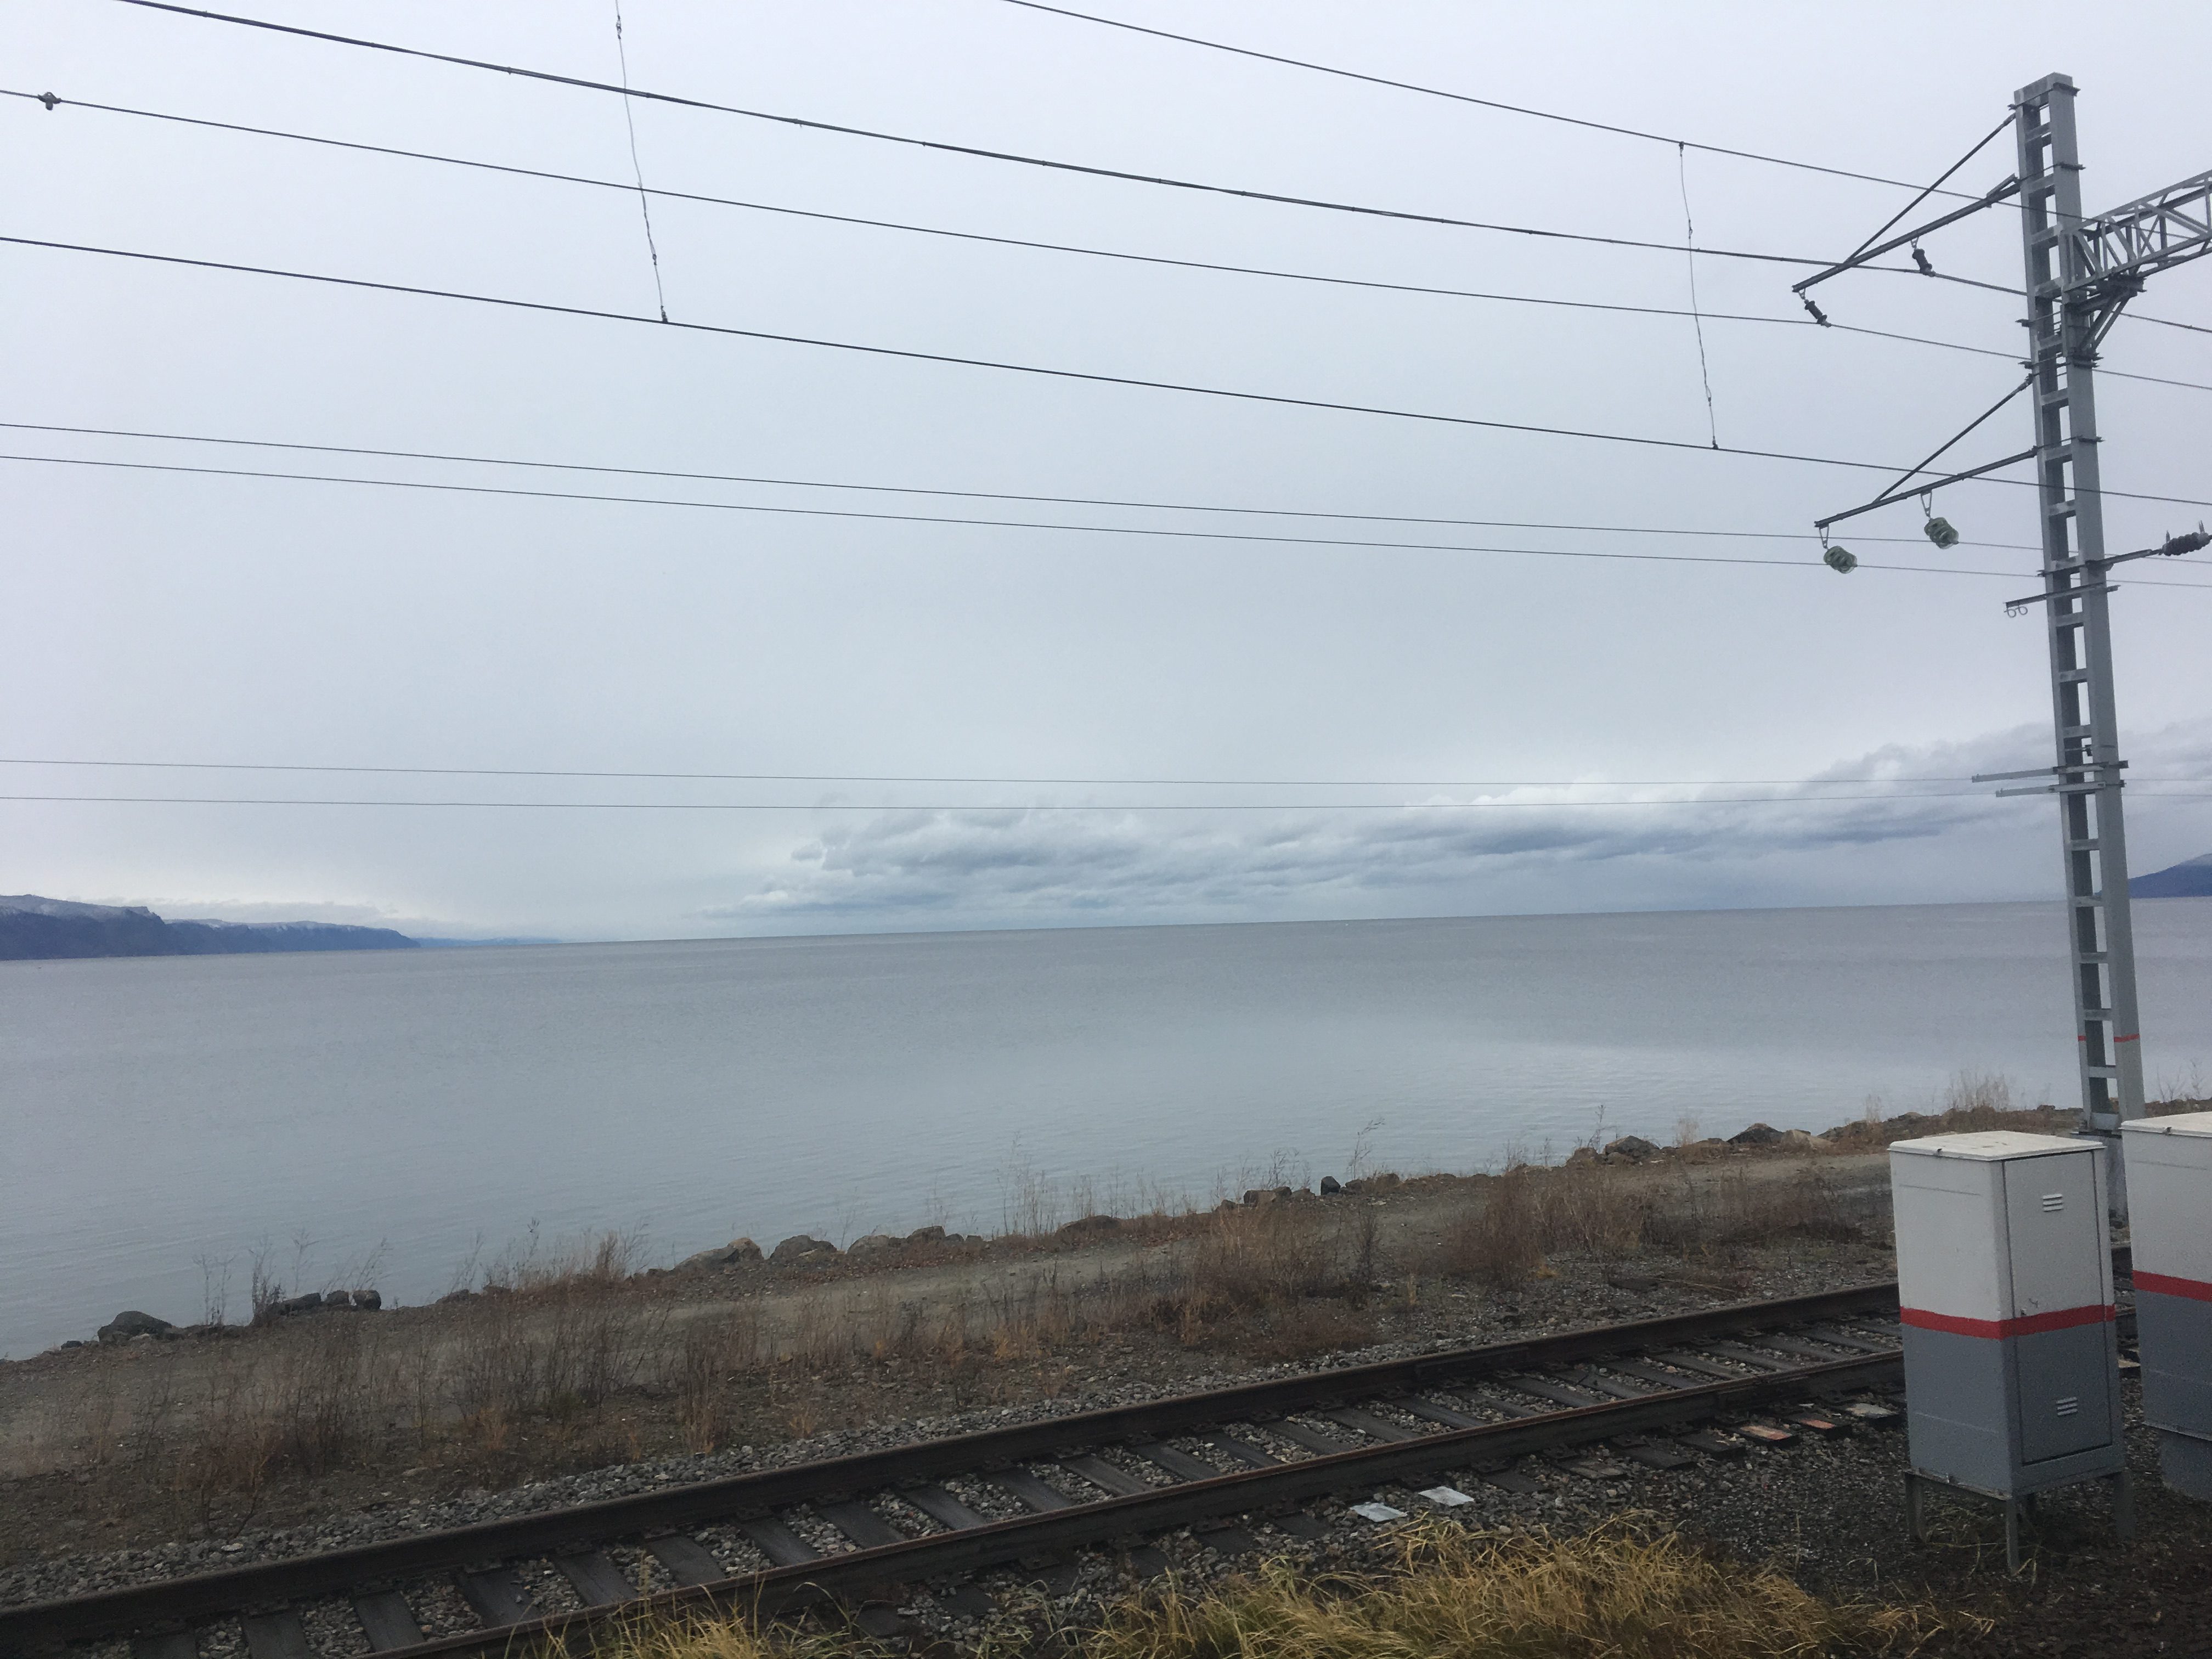 How far away do you estimate the waters of Lake Baikal?